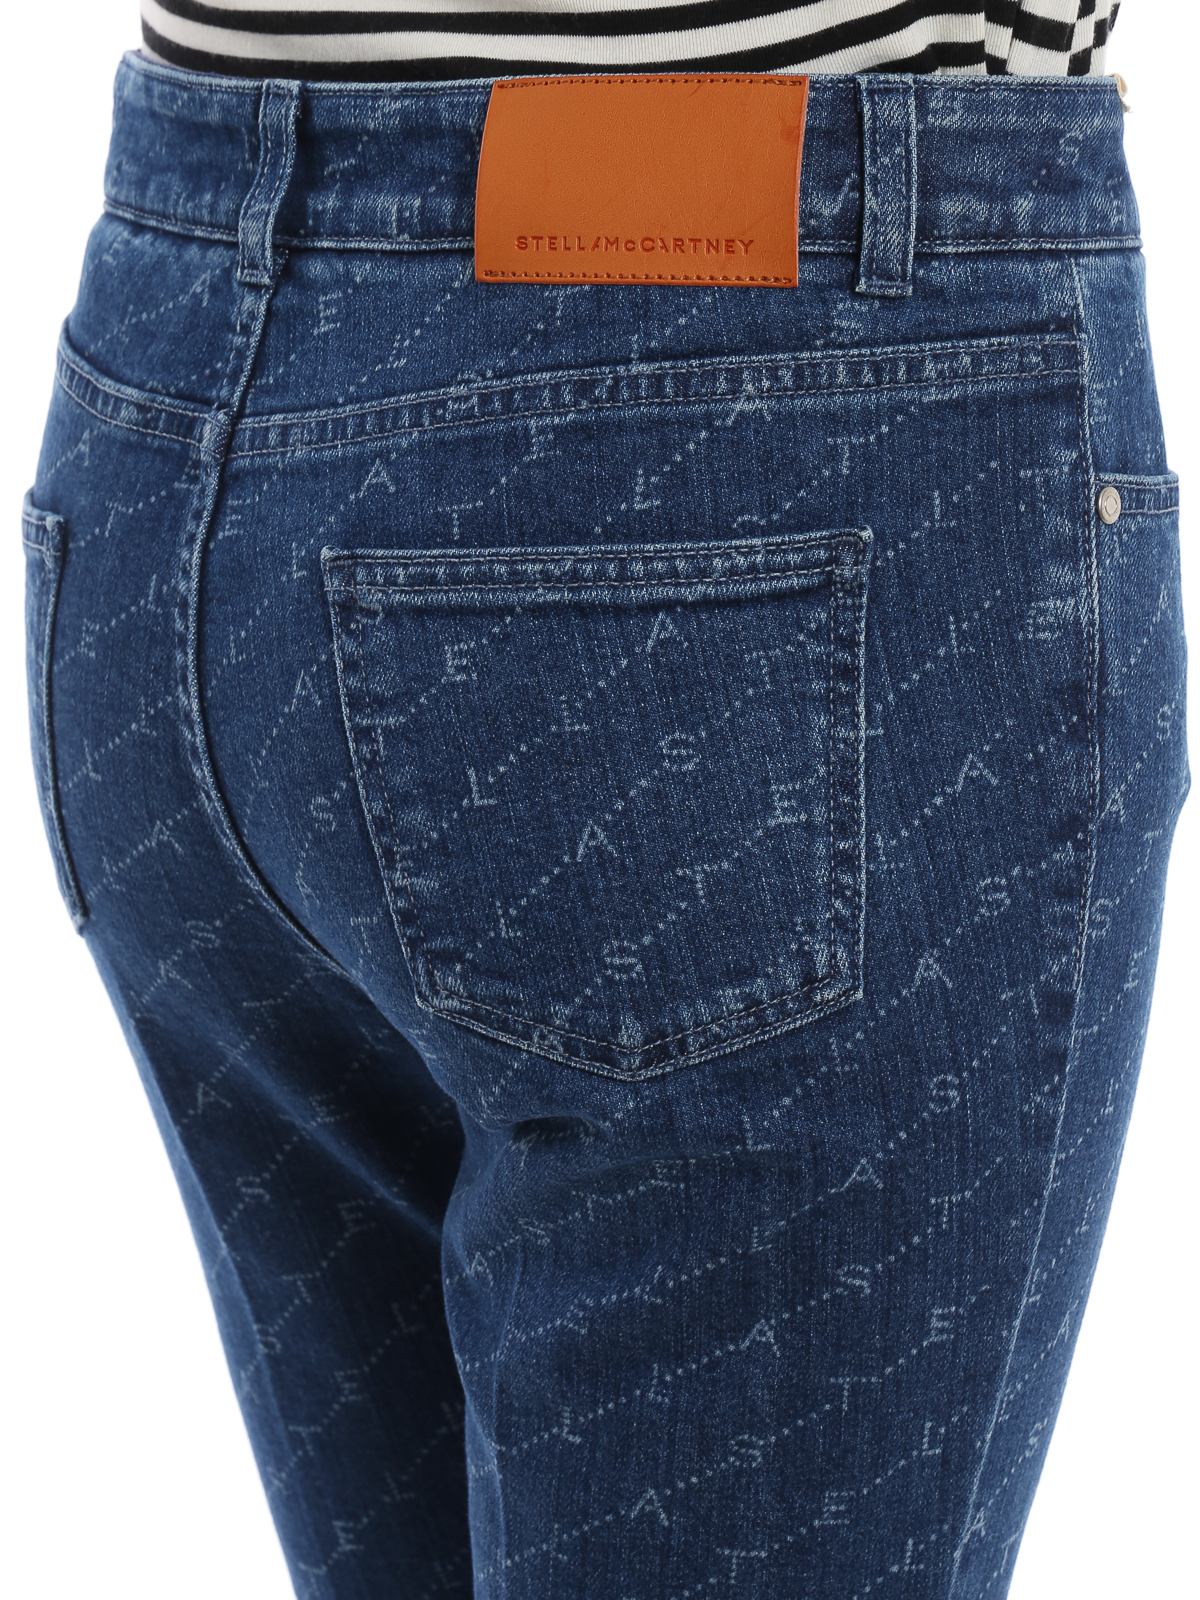 vinge Isse Jernbanestation Skinny jeans Stella Mccartney - Monogram print denim high rise jeans -  391883SMH404401